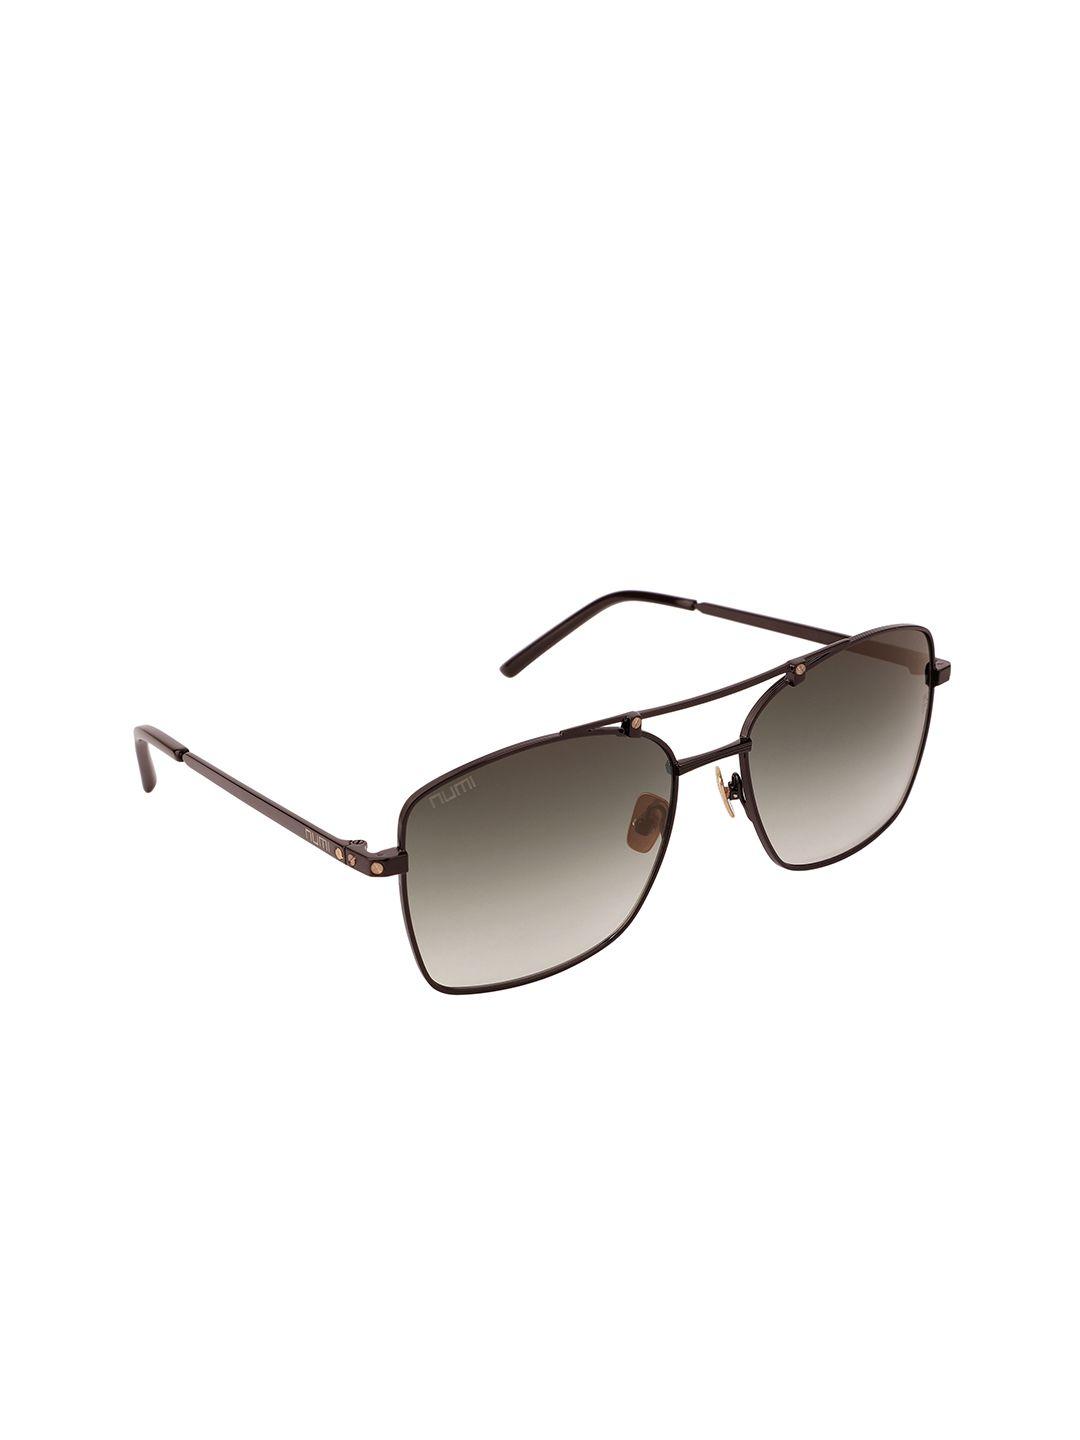 numi men grey lens & black aviator sunglasses with uv protected lens-n18139scl4